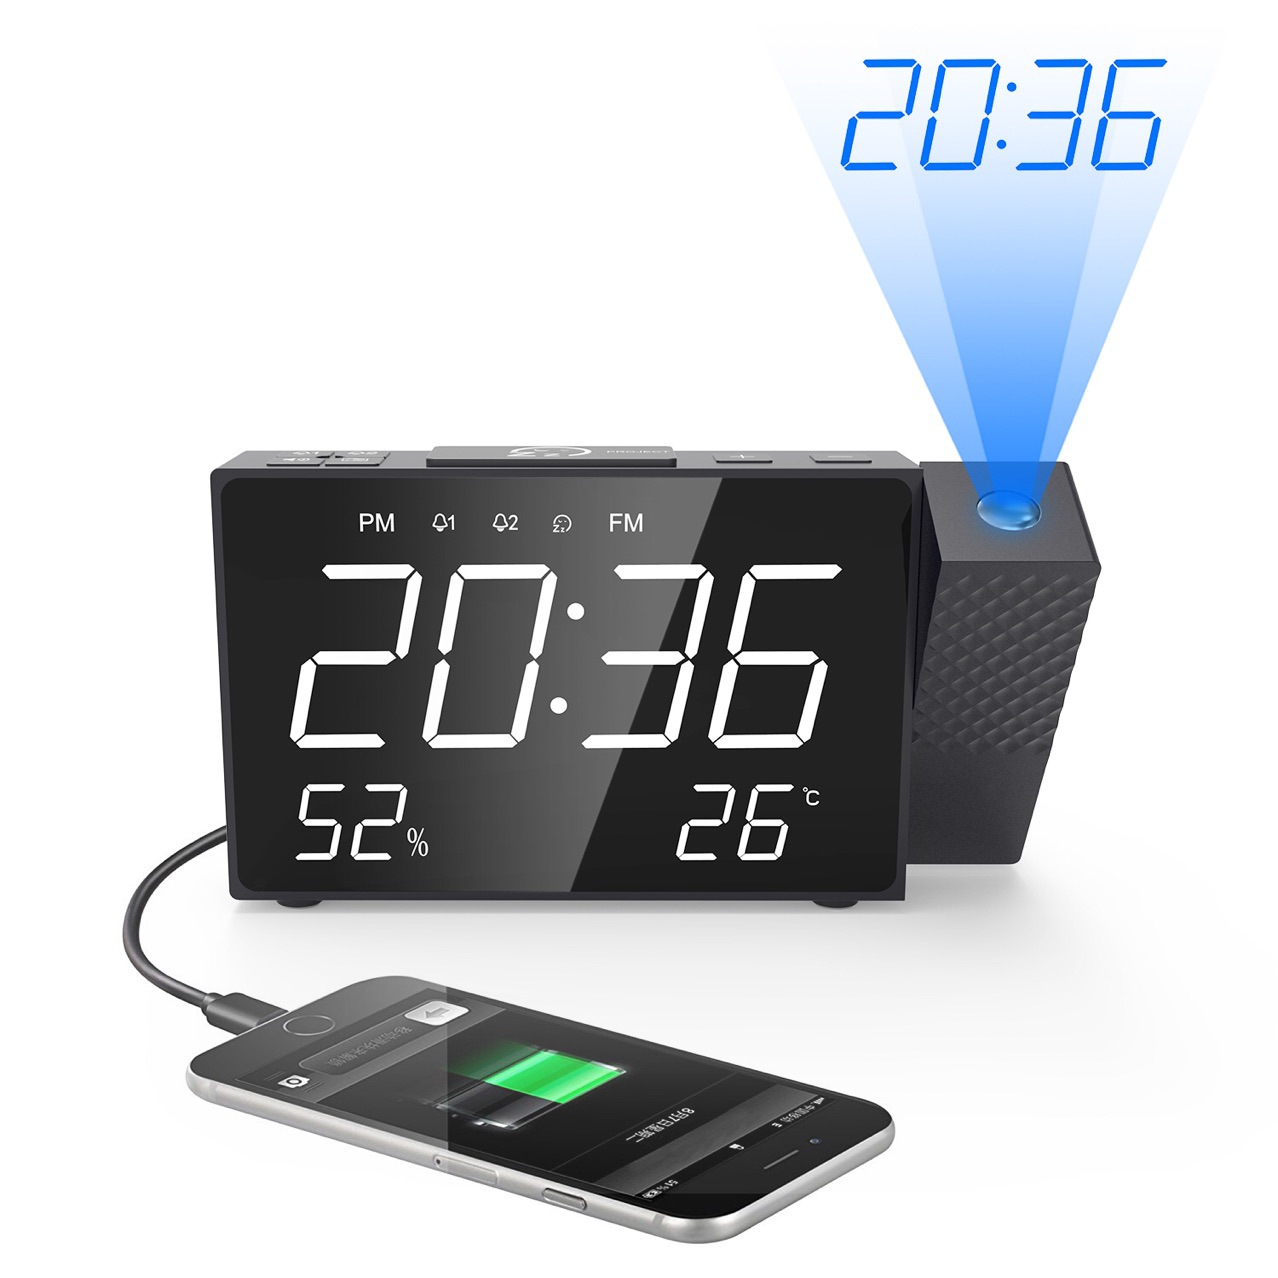 Digital Projector Alarm Clock Radio Time Temperature Wake Up Mirror Clock USB Charger LED Display Desk Table Projector Clock